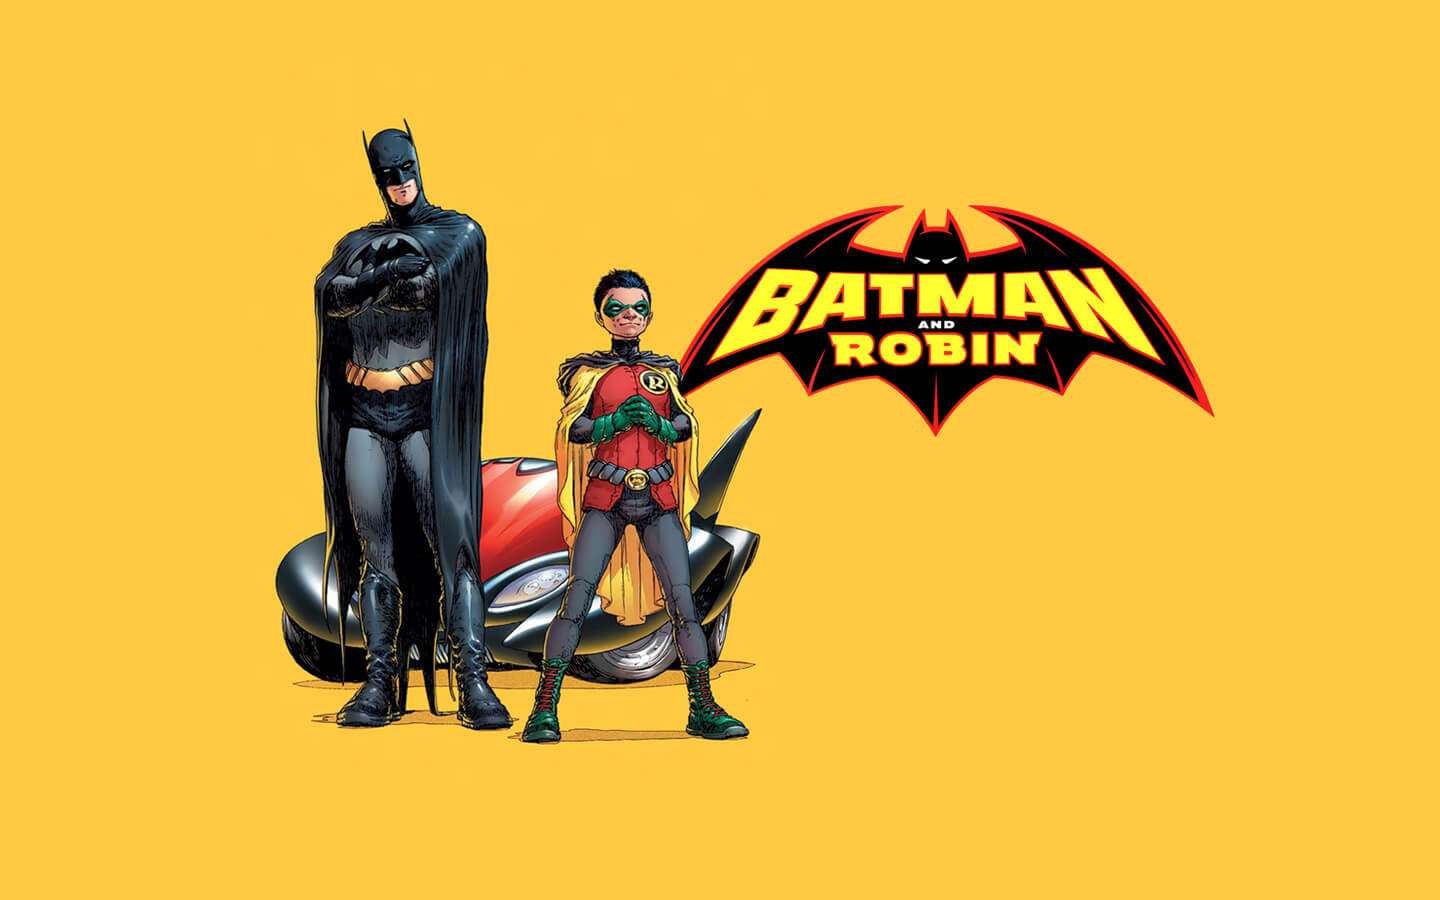 Grant Morrison Batman and Robin logo by Rian Hughes